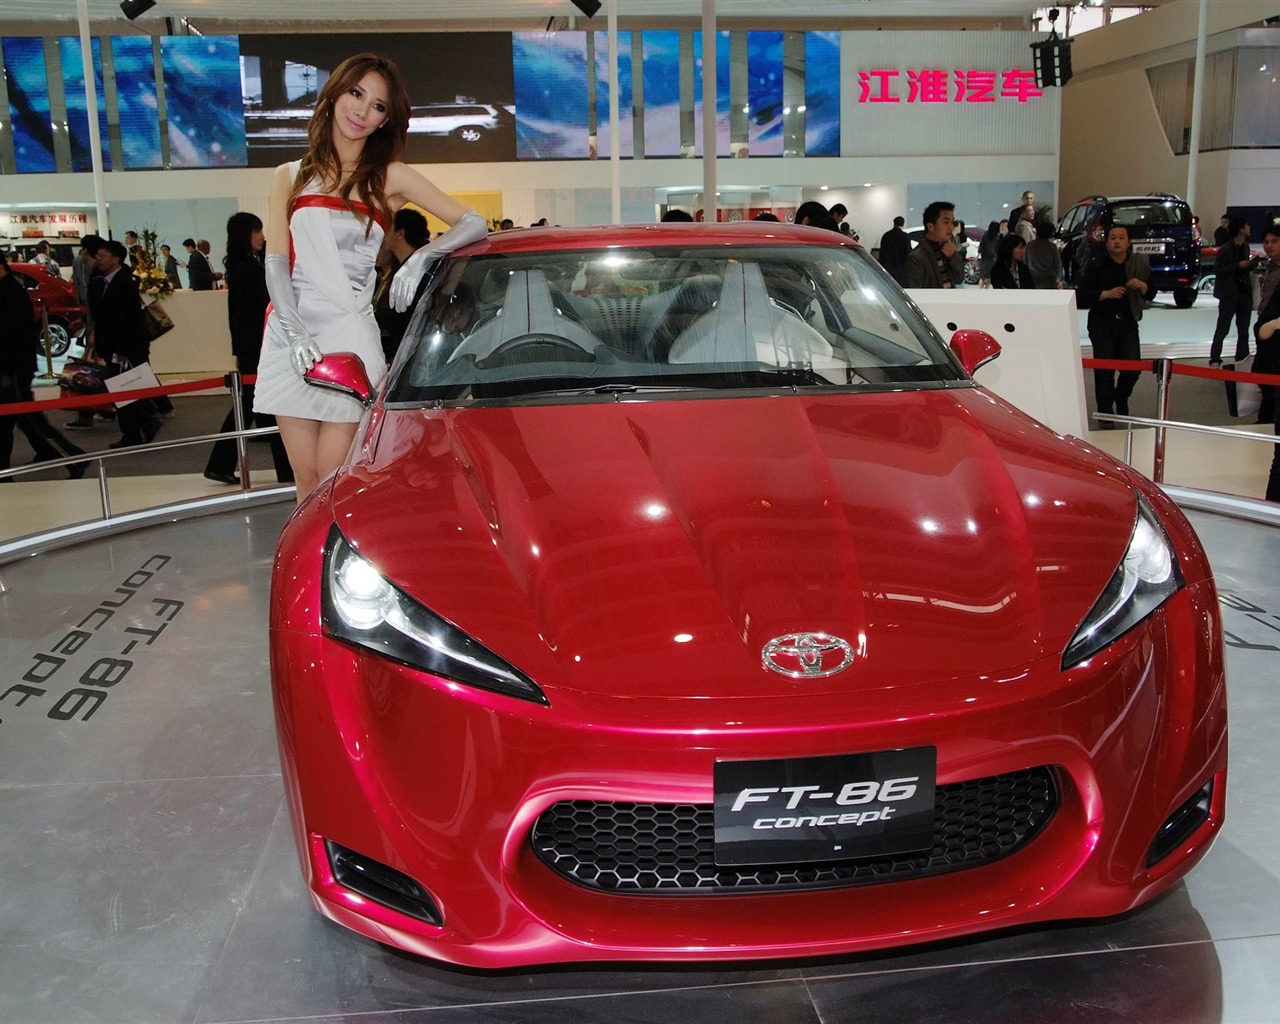 2010 Salón Internacional del Automóvil de Beijing Heung Che belleza (obras barras de refuerzo) #23 - 1280x1024